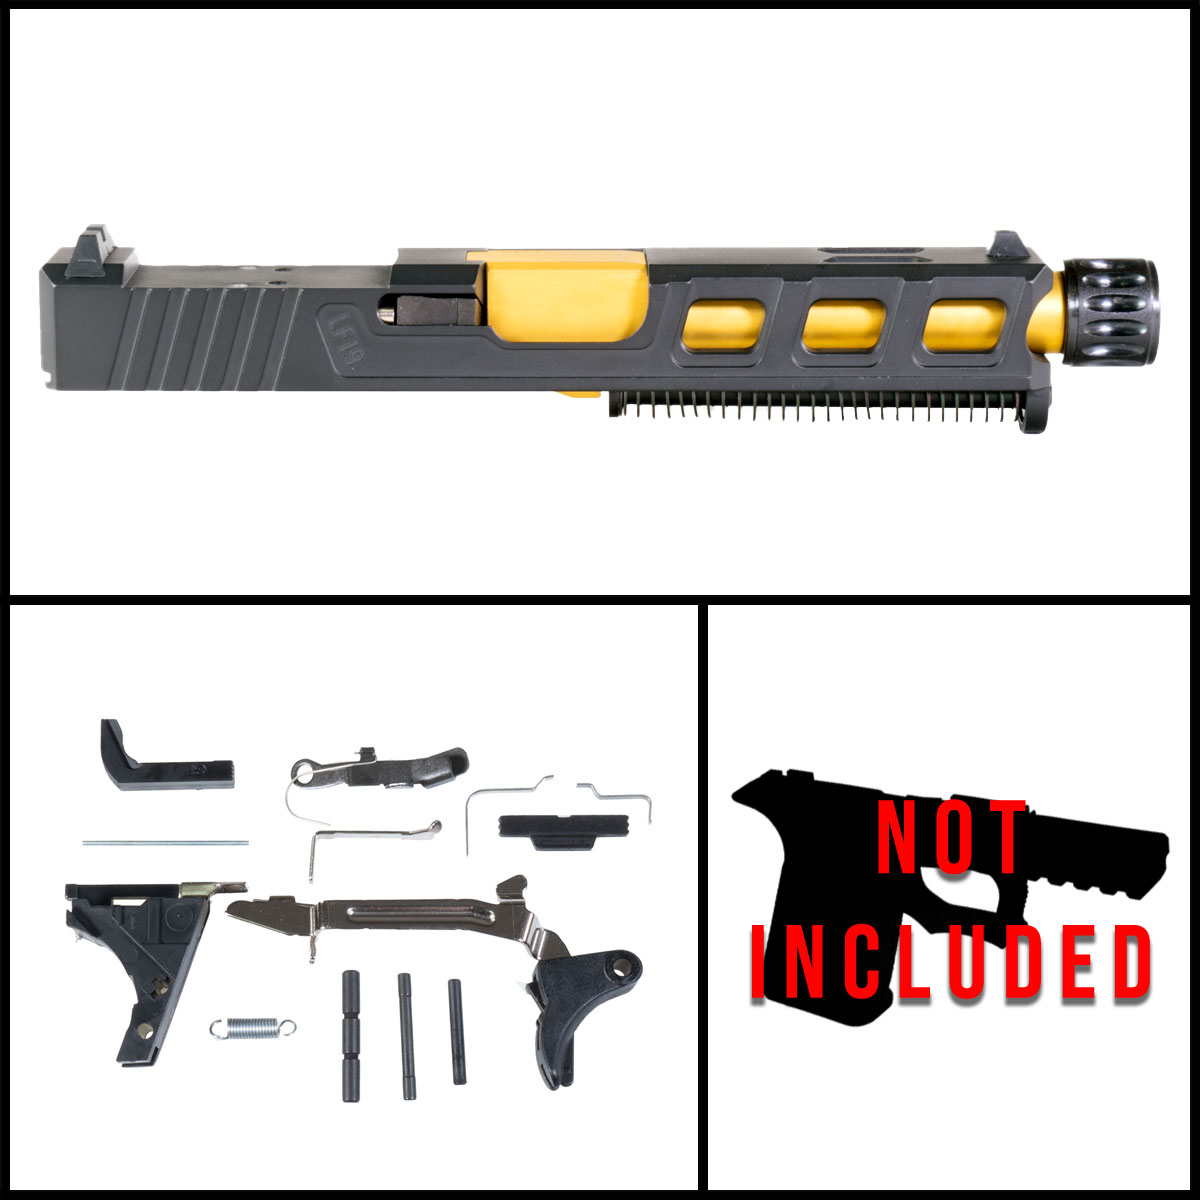 DDS 'Auge' 9mm Full Pistol Build Kit (Everything Minus Frame) - Glock 19 Gen 1-3 Compatible